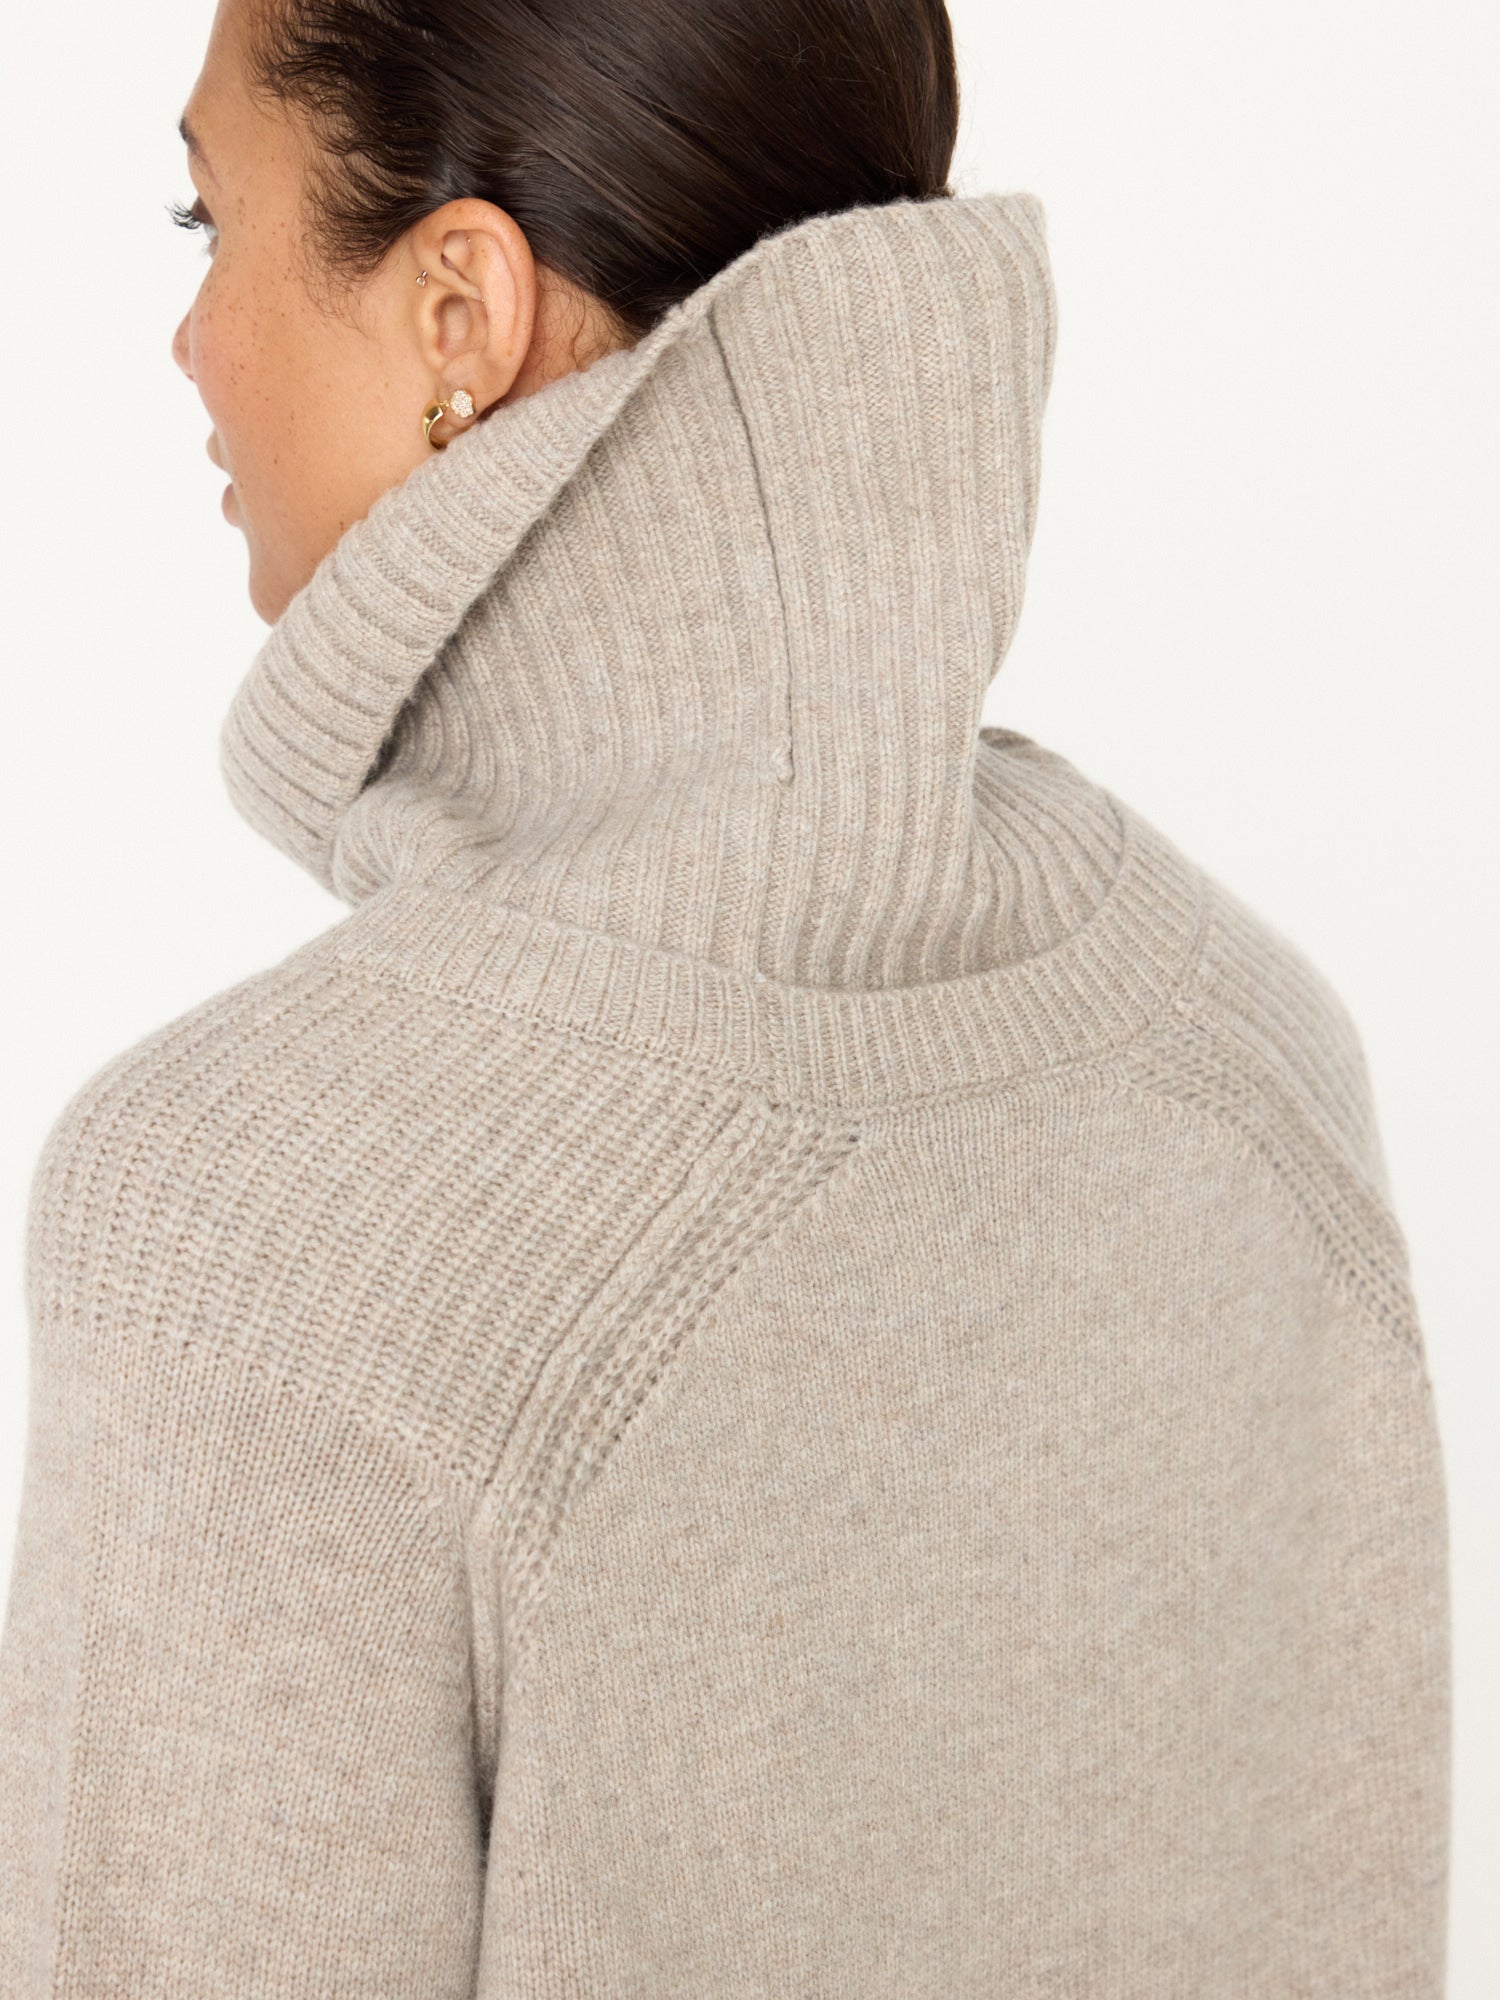 Threadbare Curve Threadbare Plus Chloe turtle neck sweater in olive -  ShopStyle